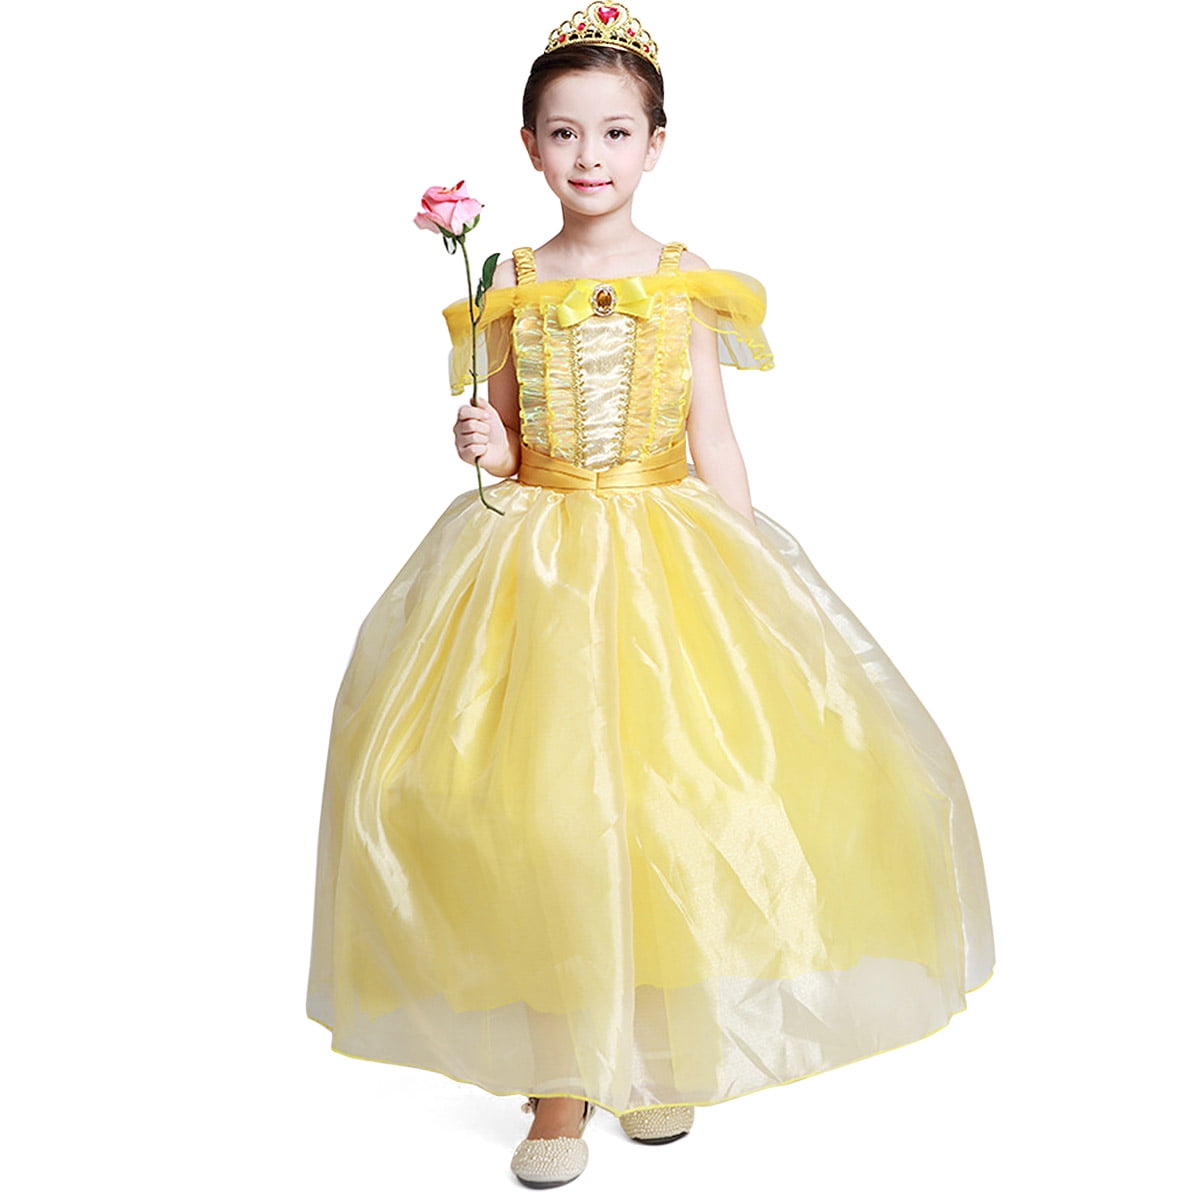 Princess Belle Sofia Dress Up Costume Princess Jewelry Kit for Girls 